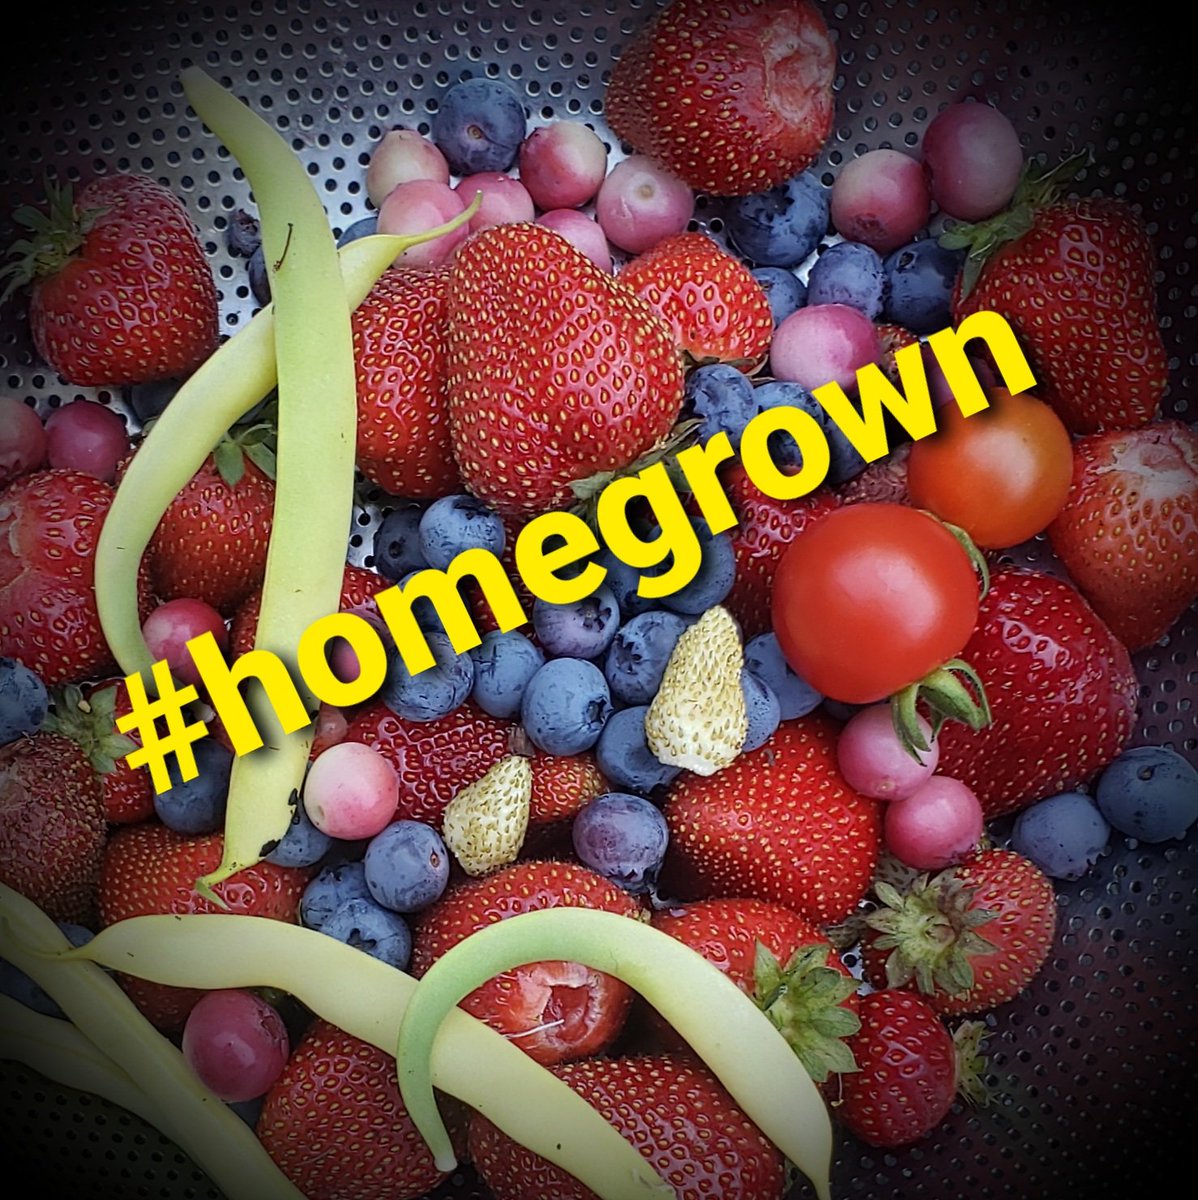 #garden #gardening #growyourownfood #homegrownvegetables #homegrownveggies #homegrown #growyourown #gardening_feature #homegrownfood #organic